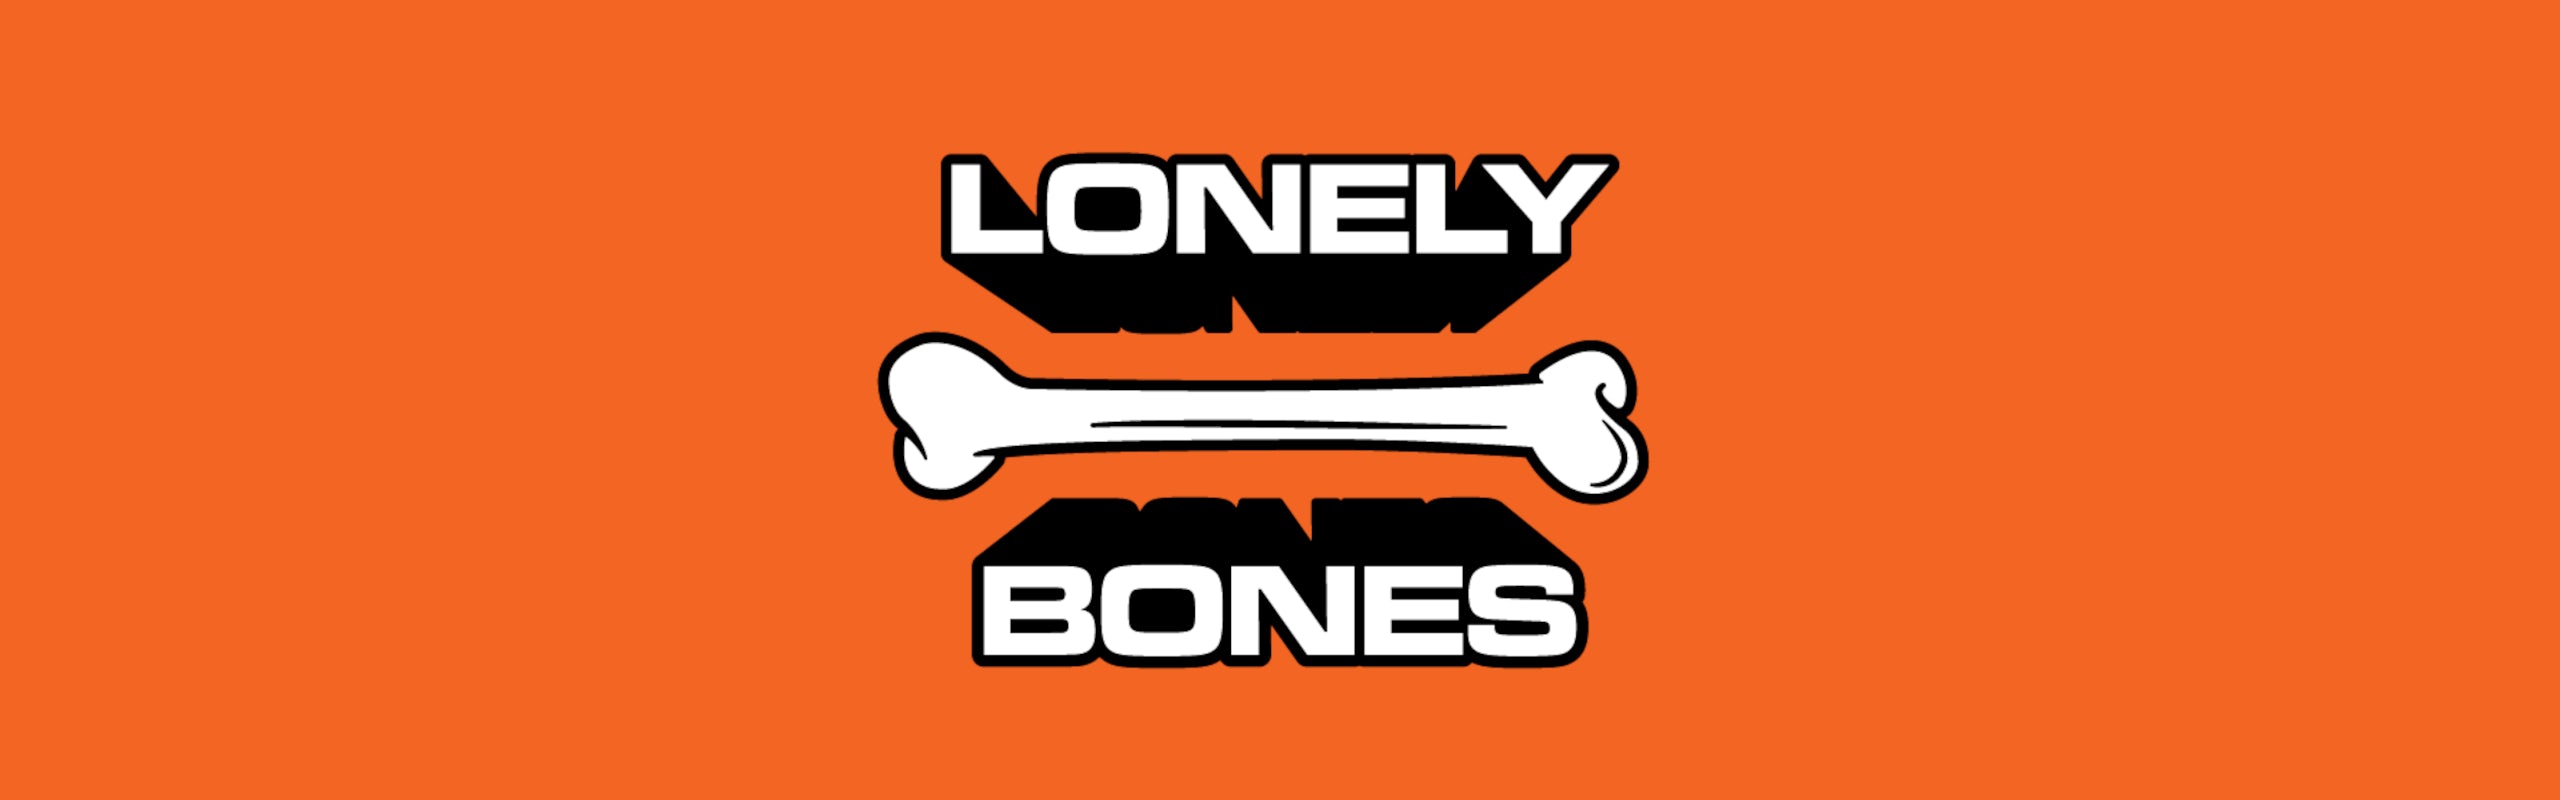 Lonely Bones banner